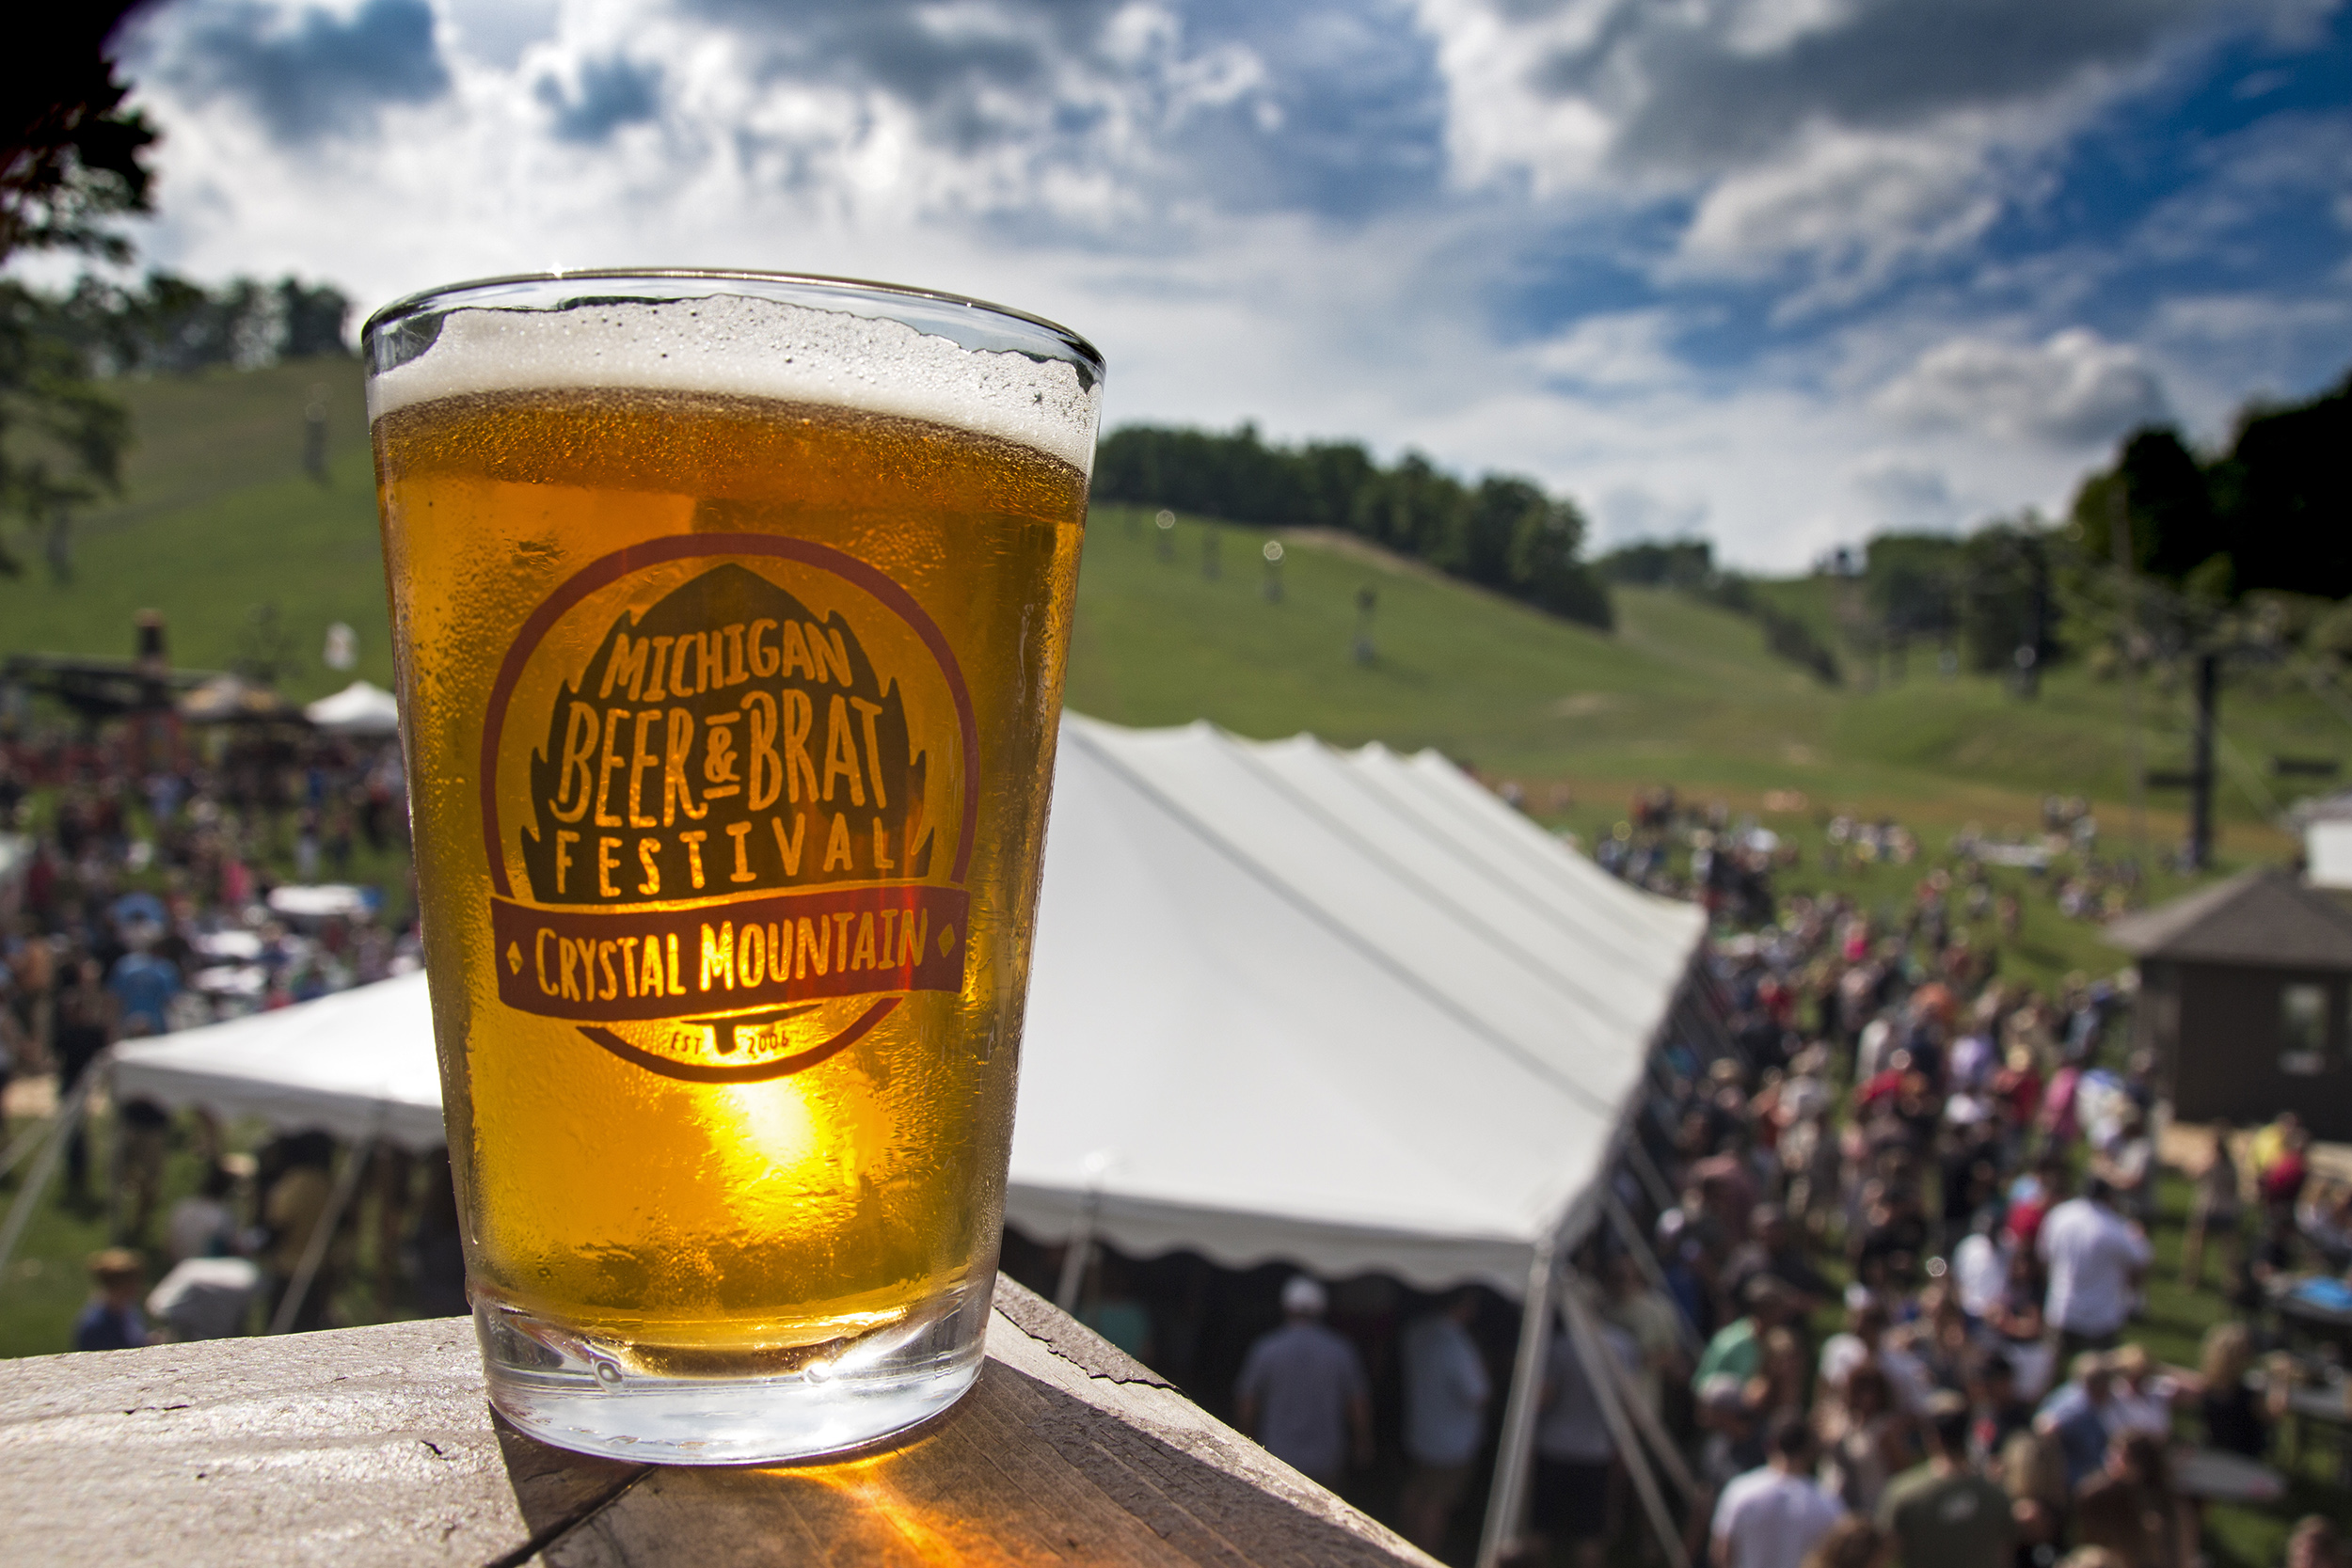 Michigan Beer & Brat Festival Crystal Mountain Michigan